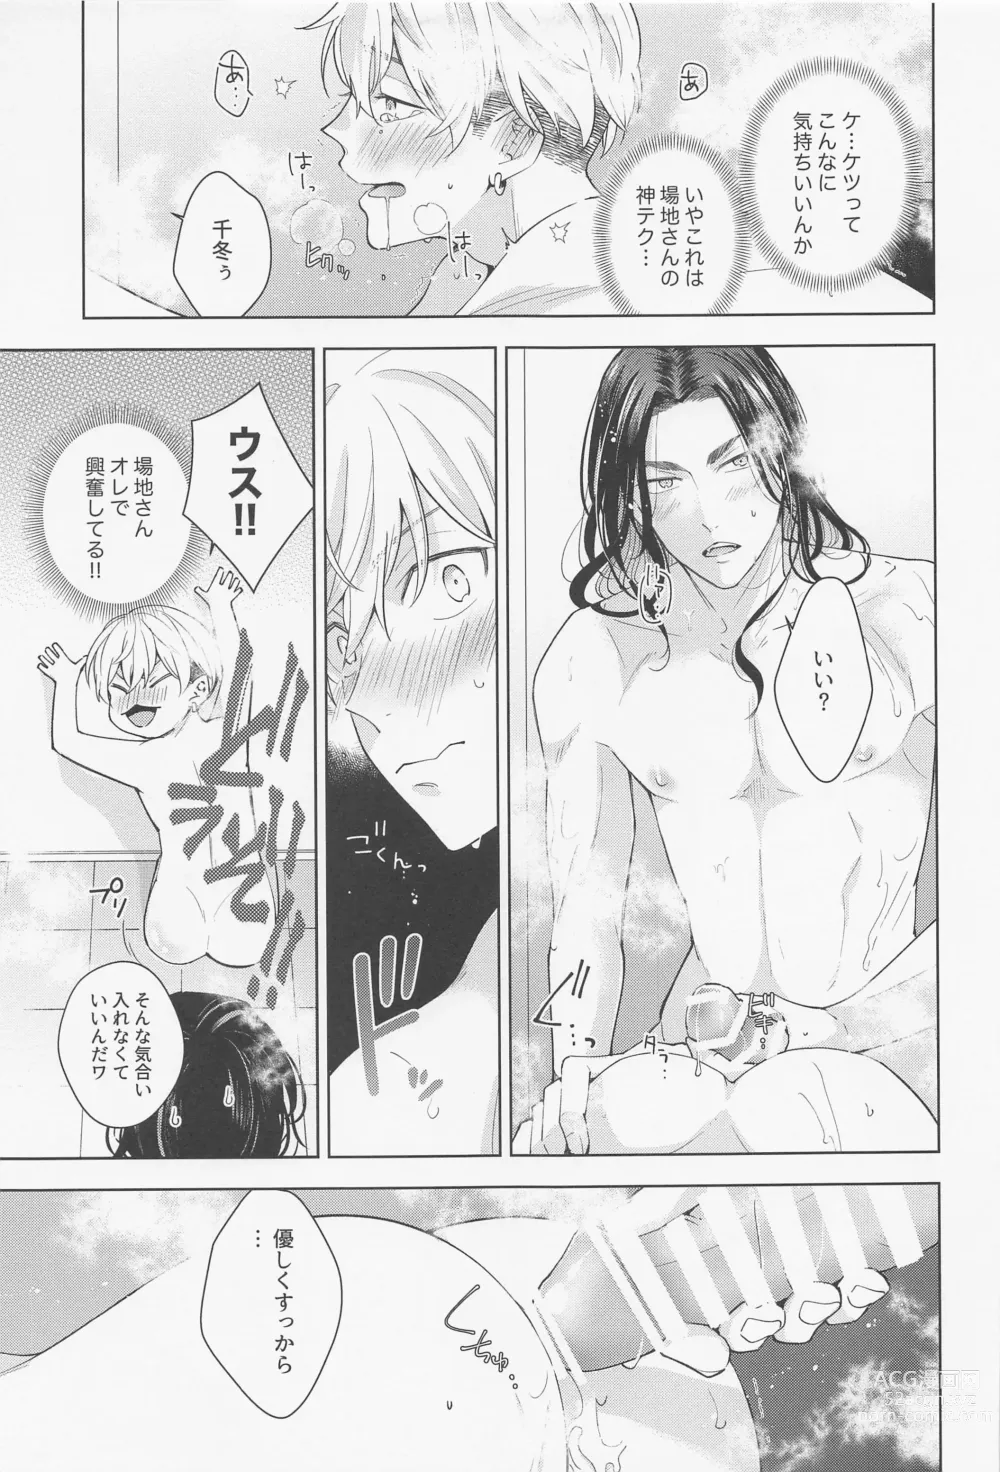 Page 54 of doujinshi Hopeless Romantic